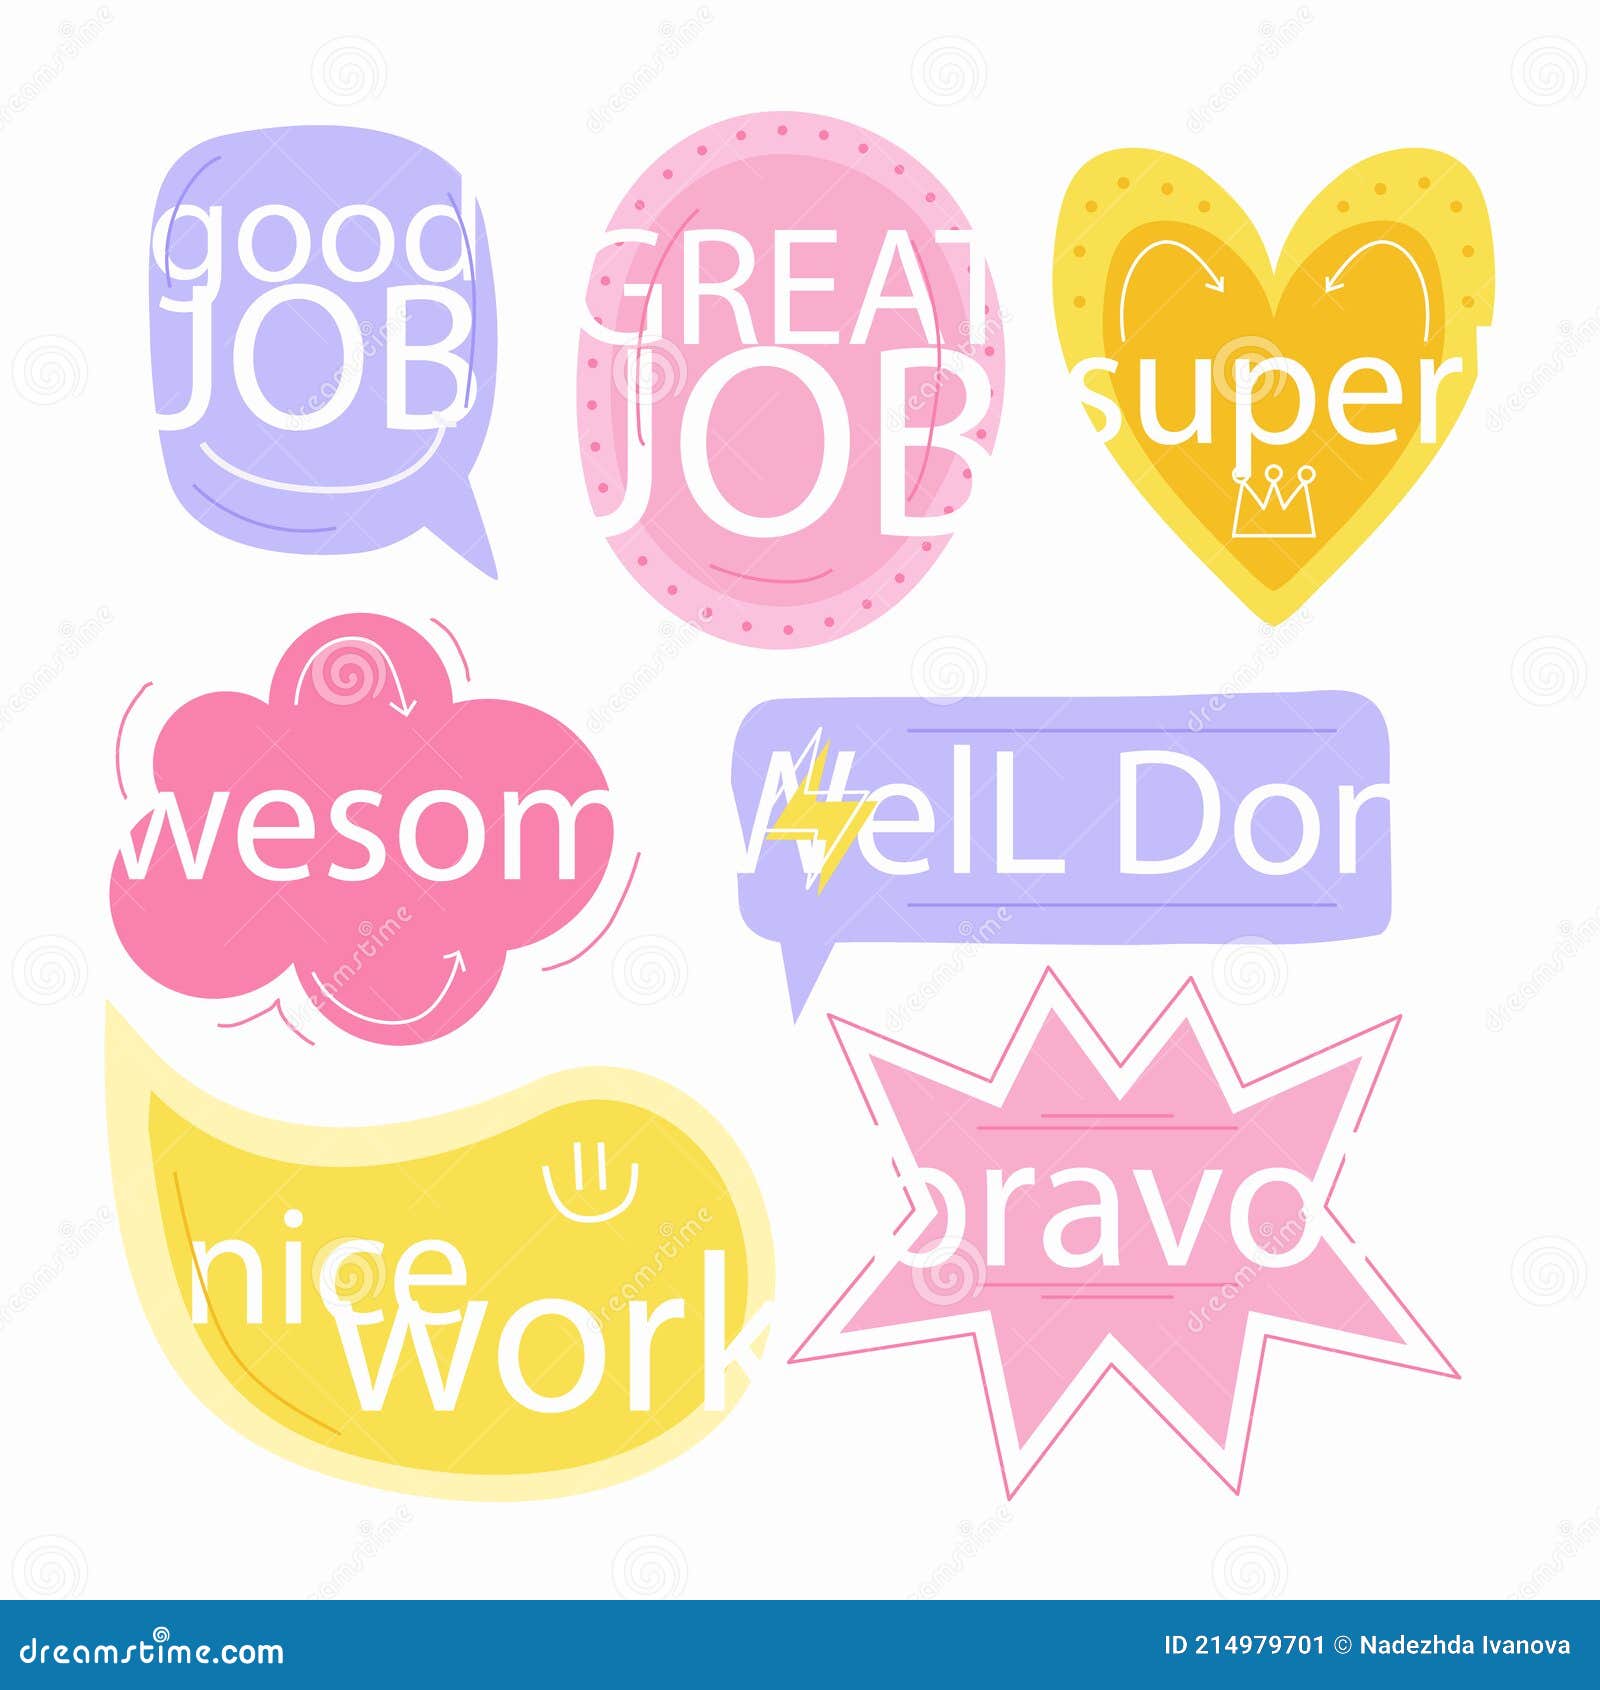 https://thumbs.dreamstime.com/z/set-good-job-great-stickers-vector-illustration-214979701.jpg